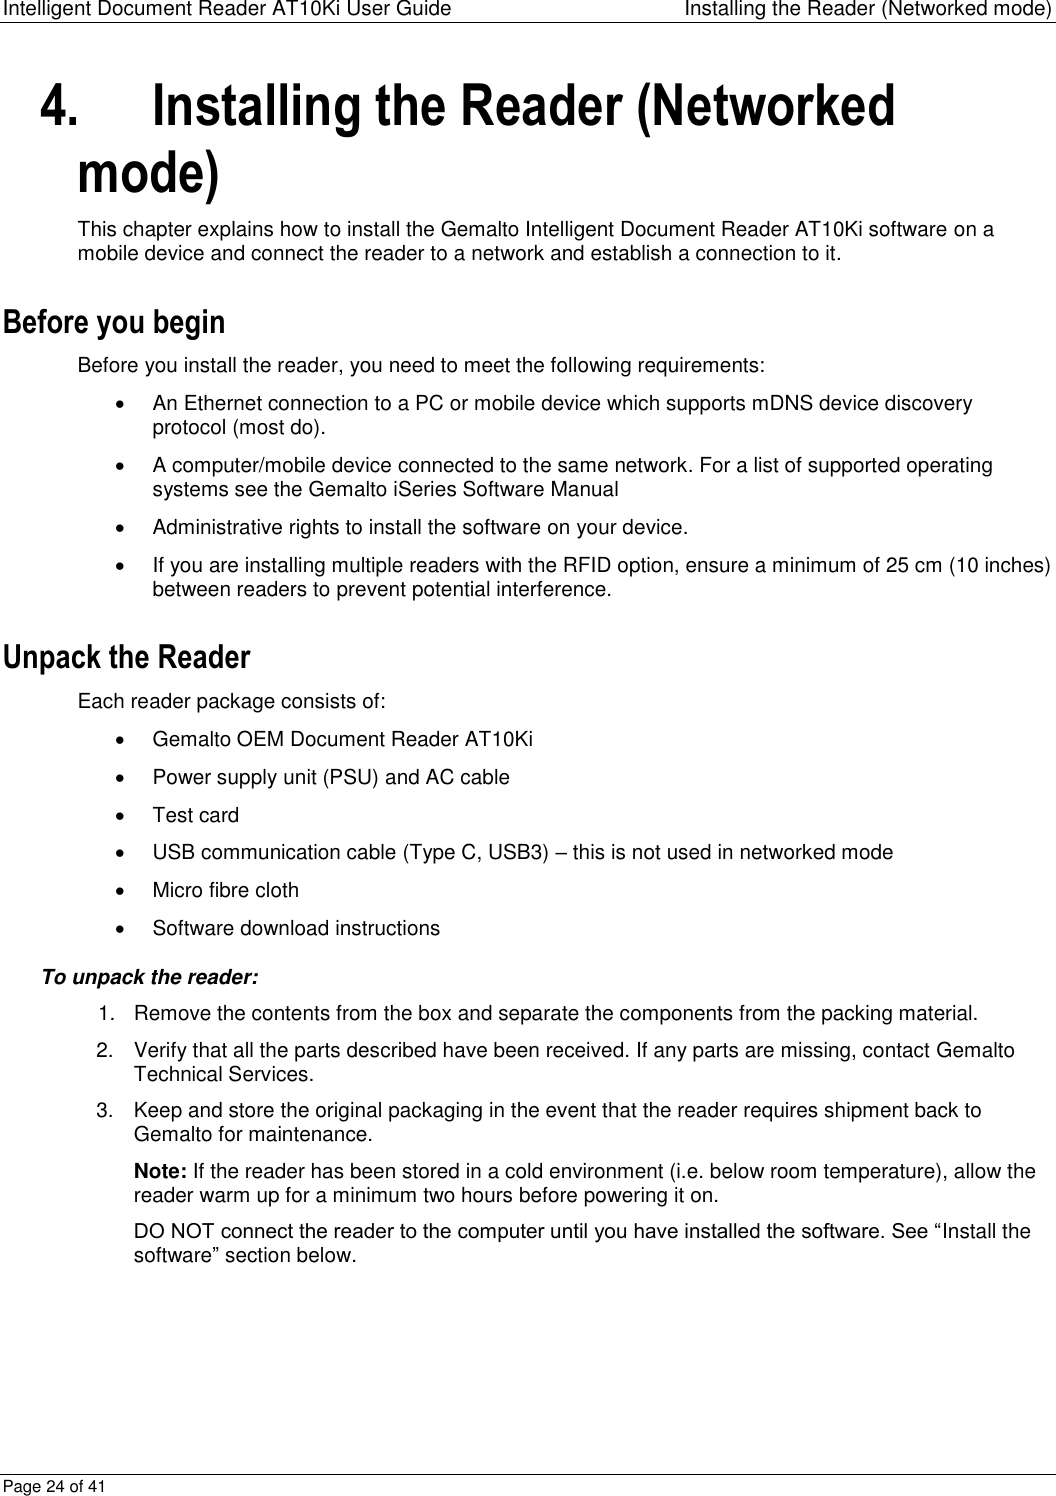 Page 24 of Thales DIS USA PR01523 ation Scanner User Manual